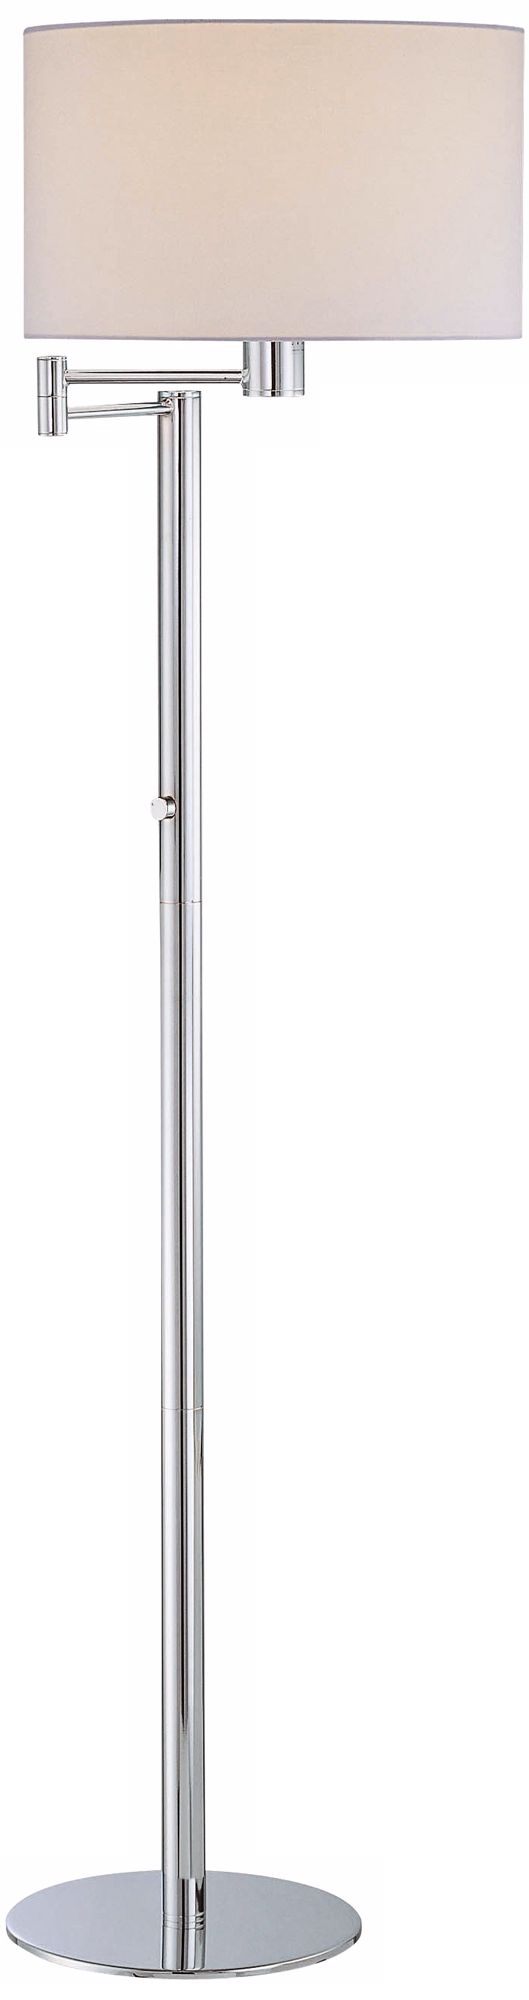 Lite Source Gervasio Chrome Swing Arm Floor Lamp - Image 0